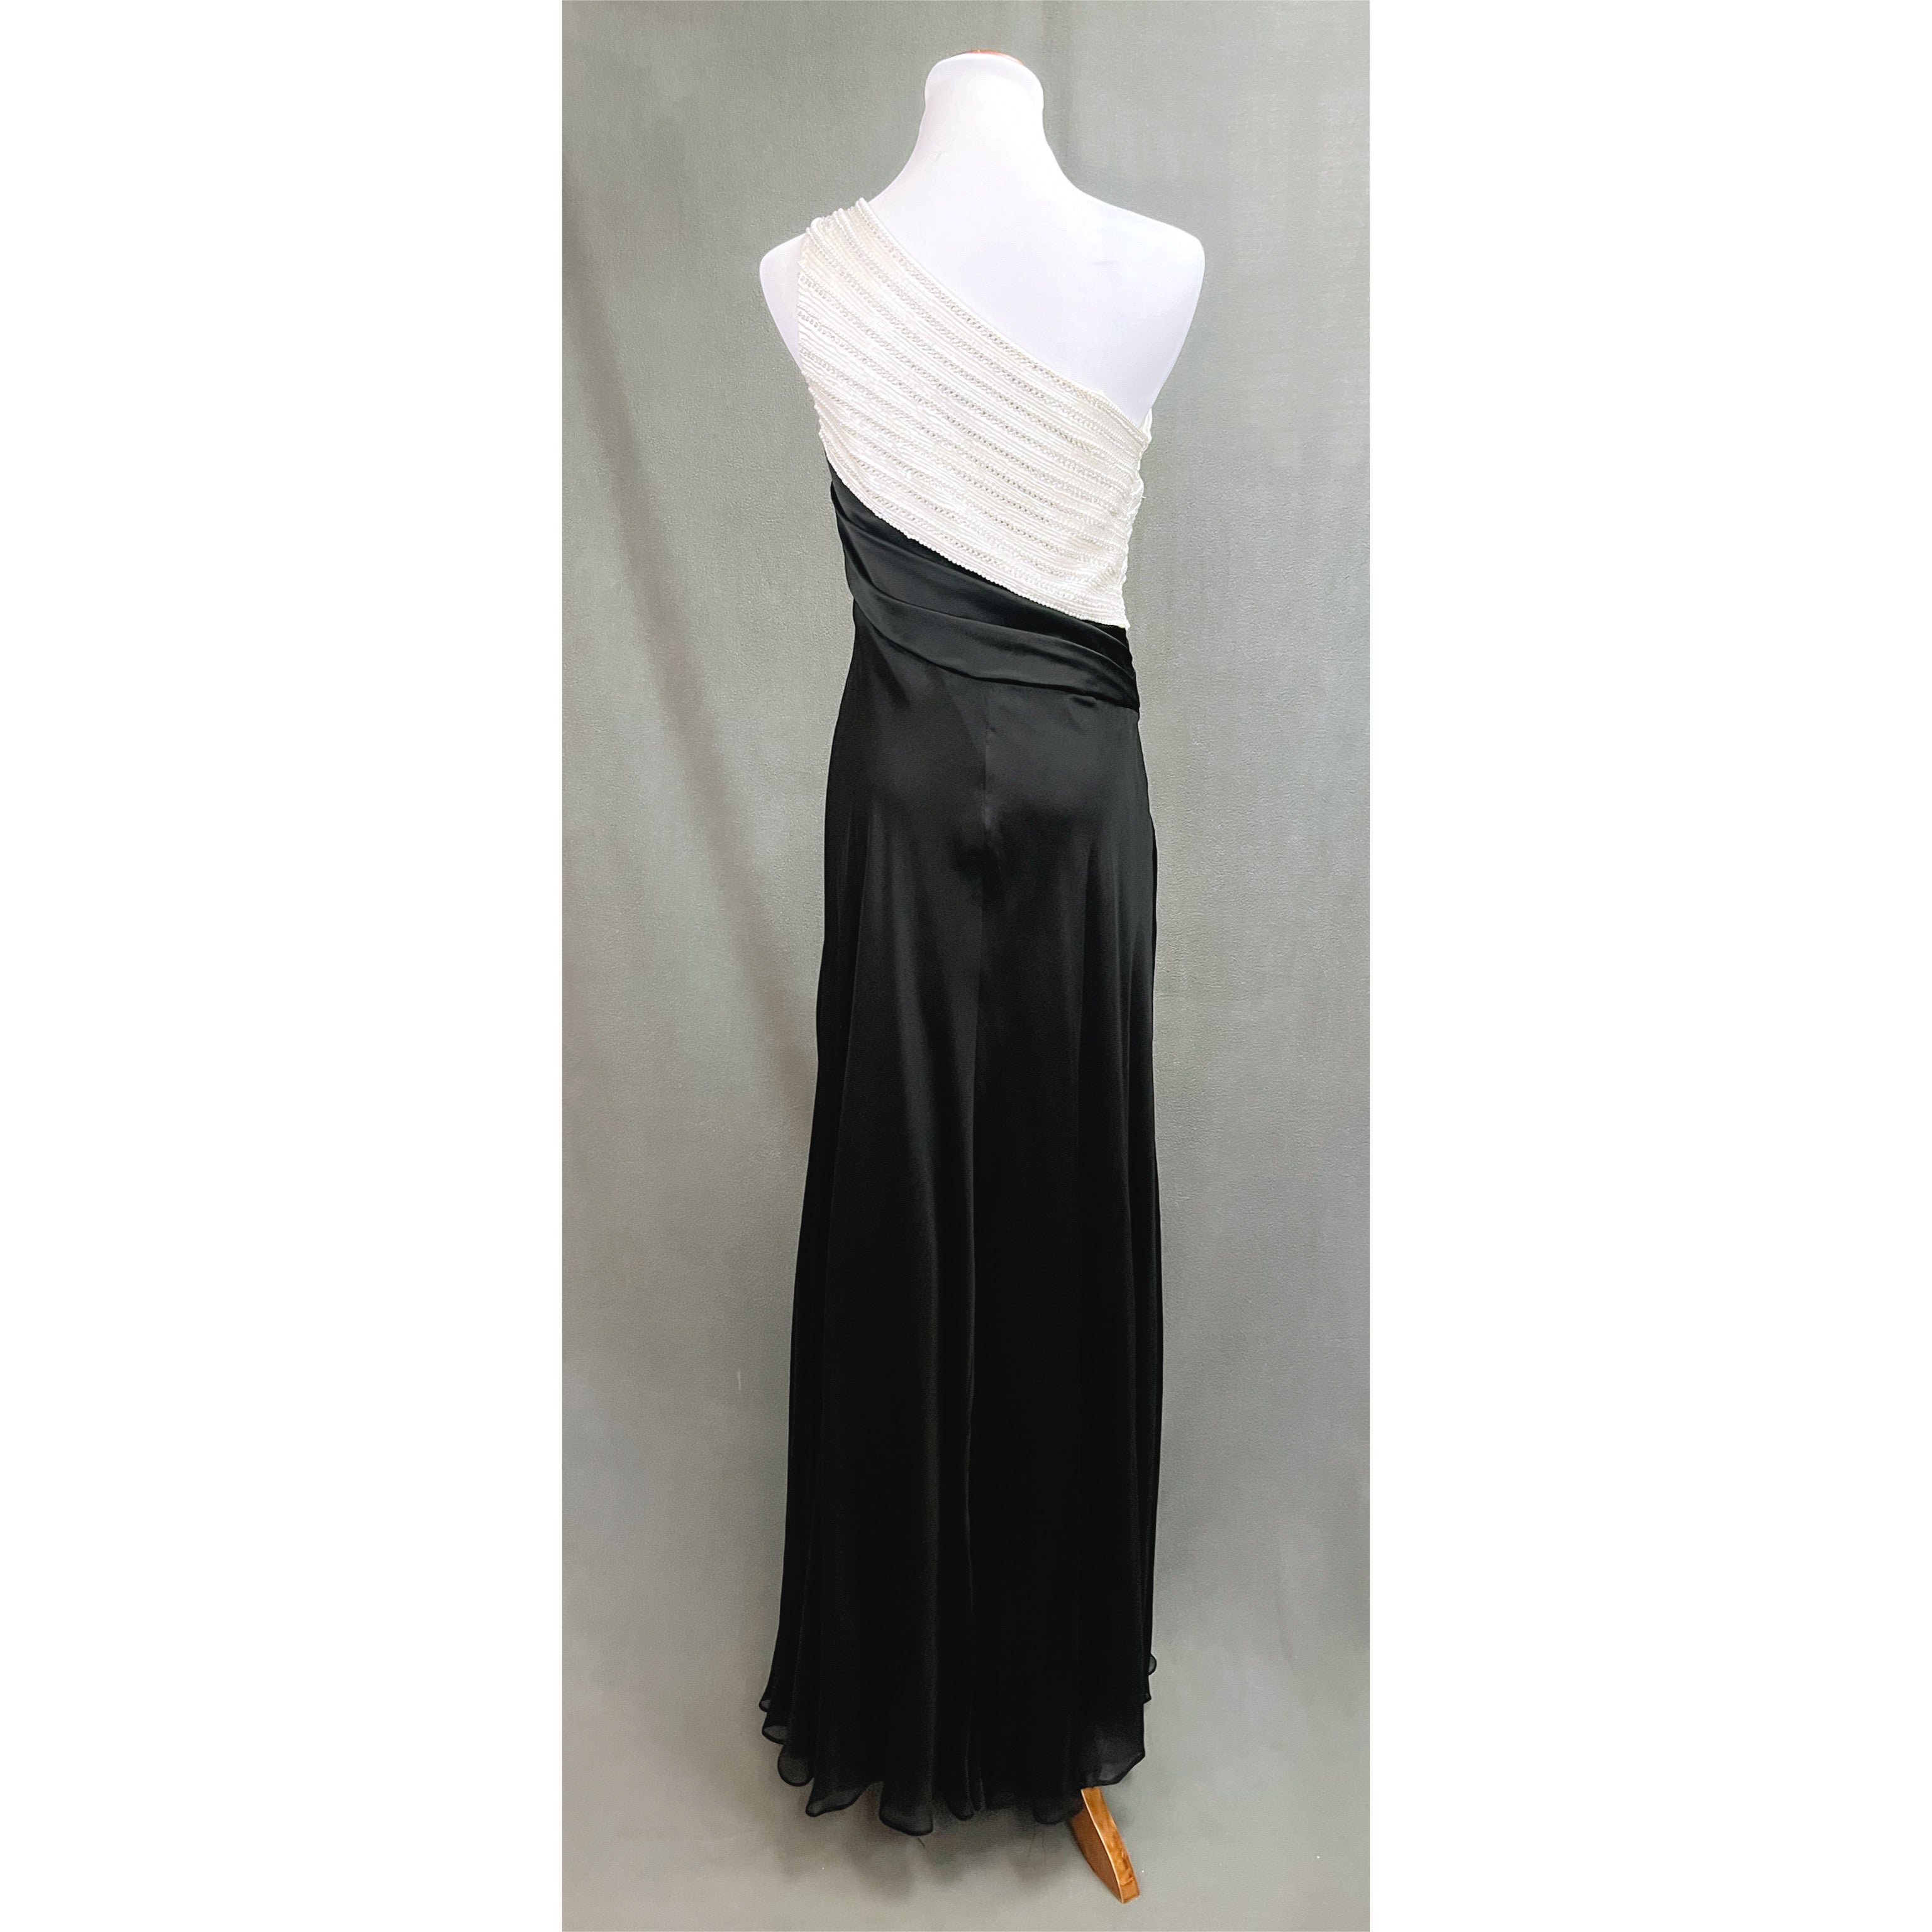 Carmen Marc Valvo pearl and black dress, size 4